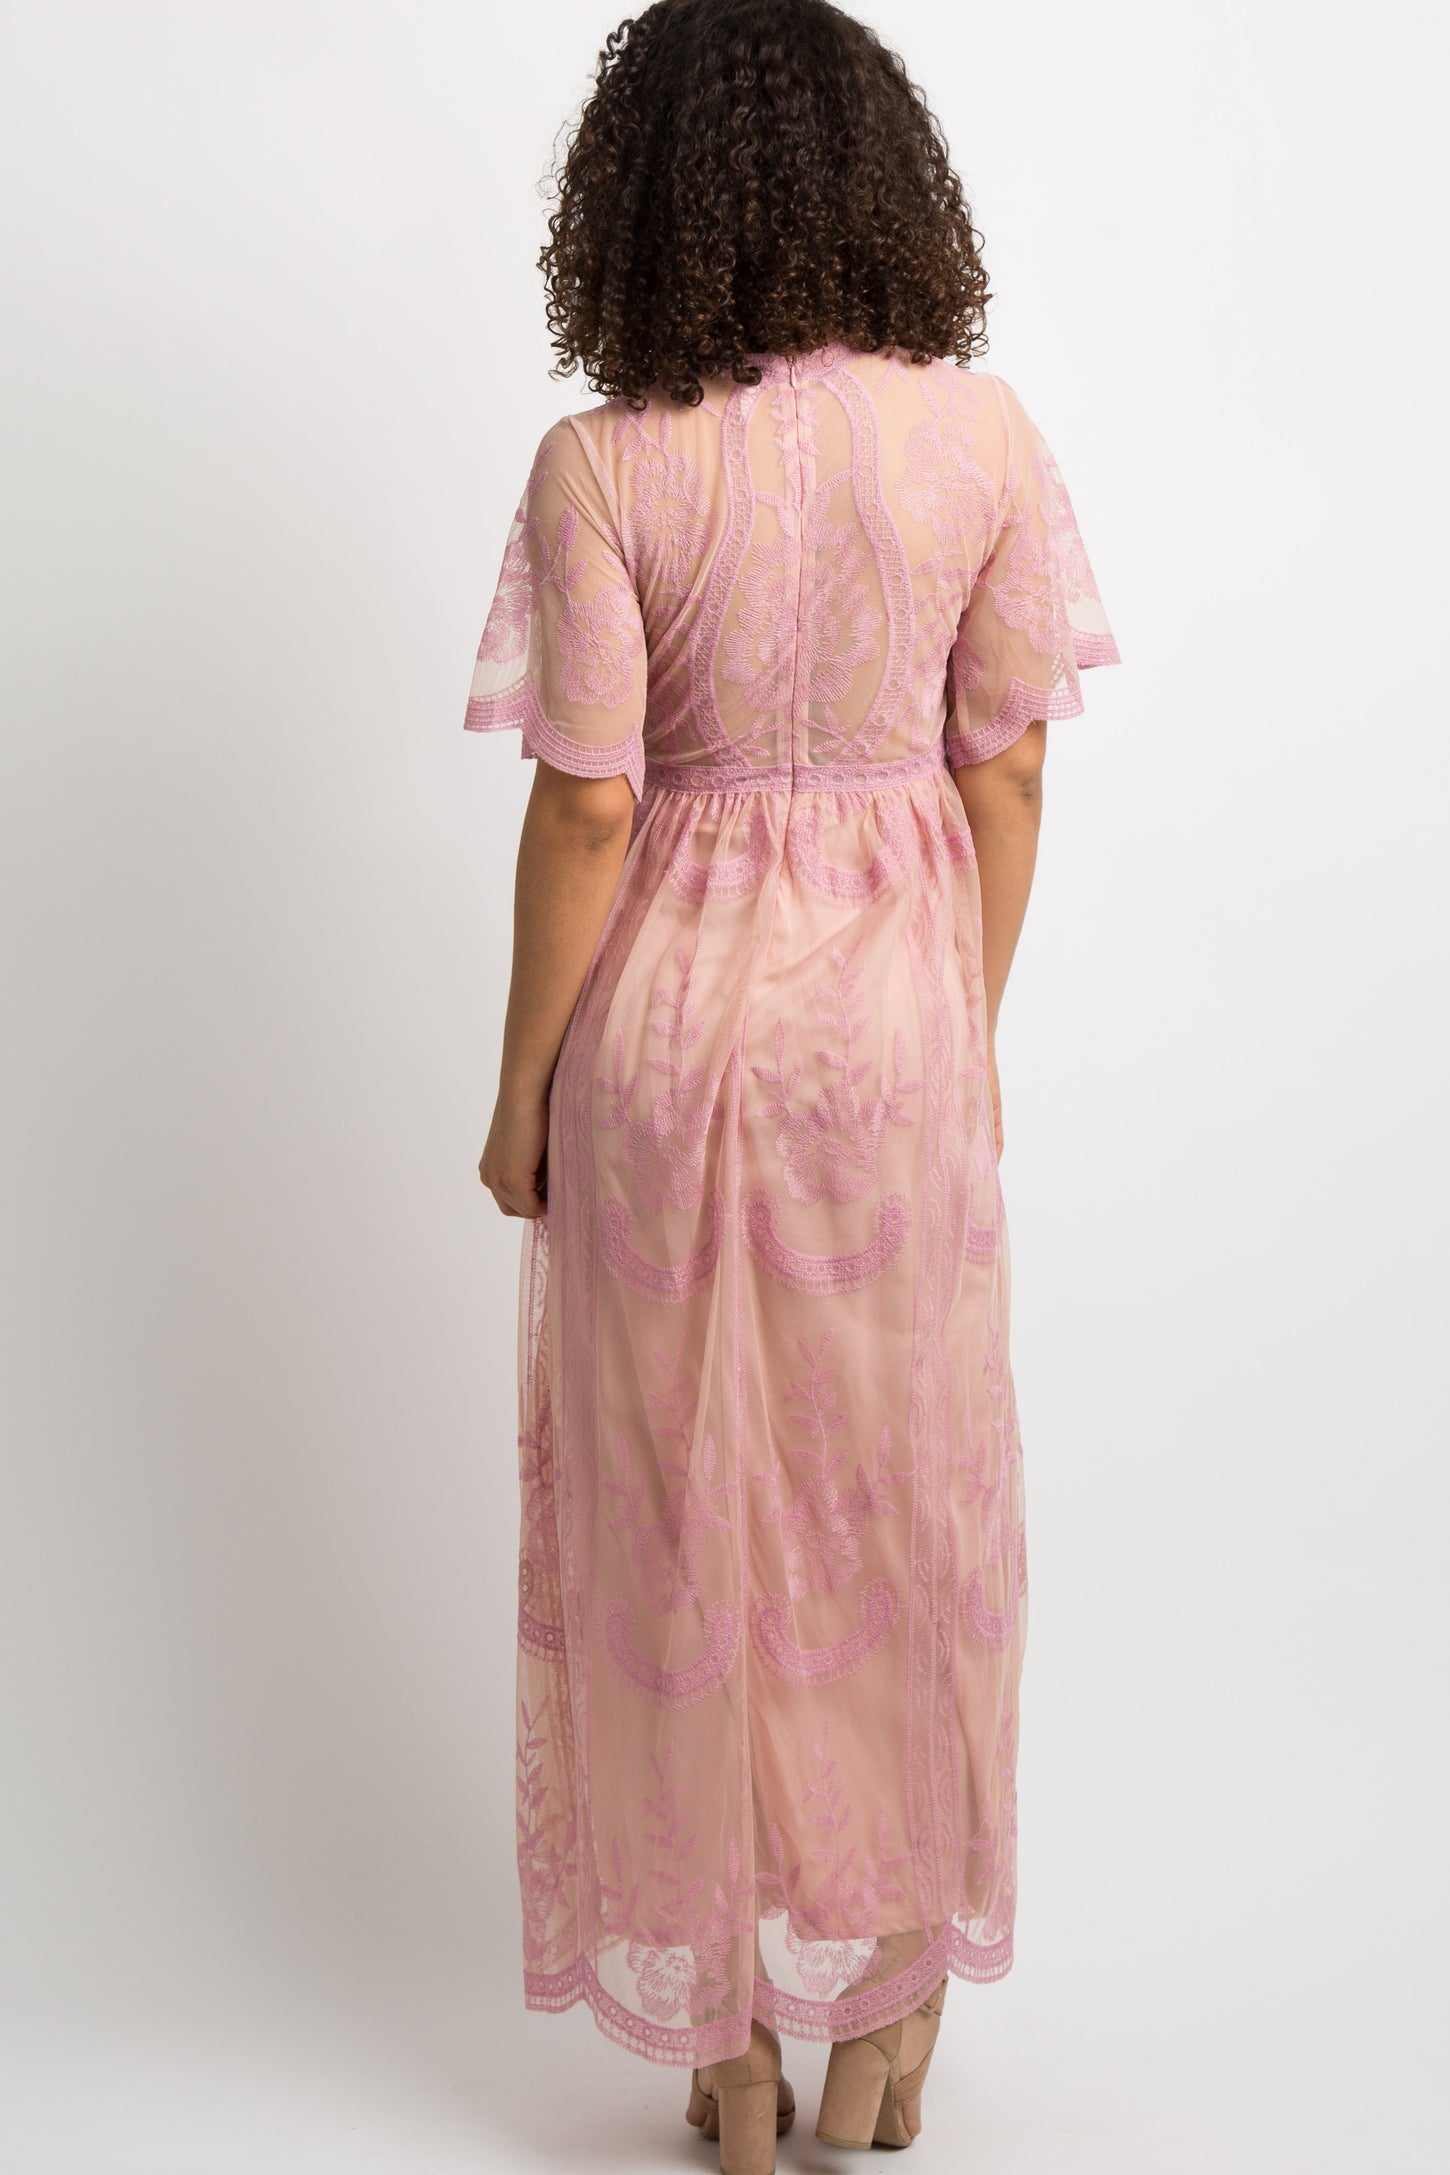 Junie Pink Lace Floral Mini Dress